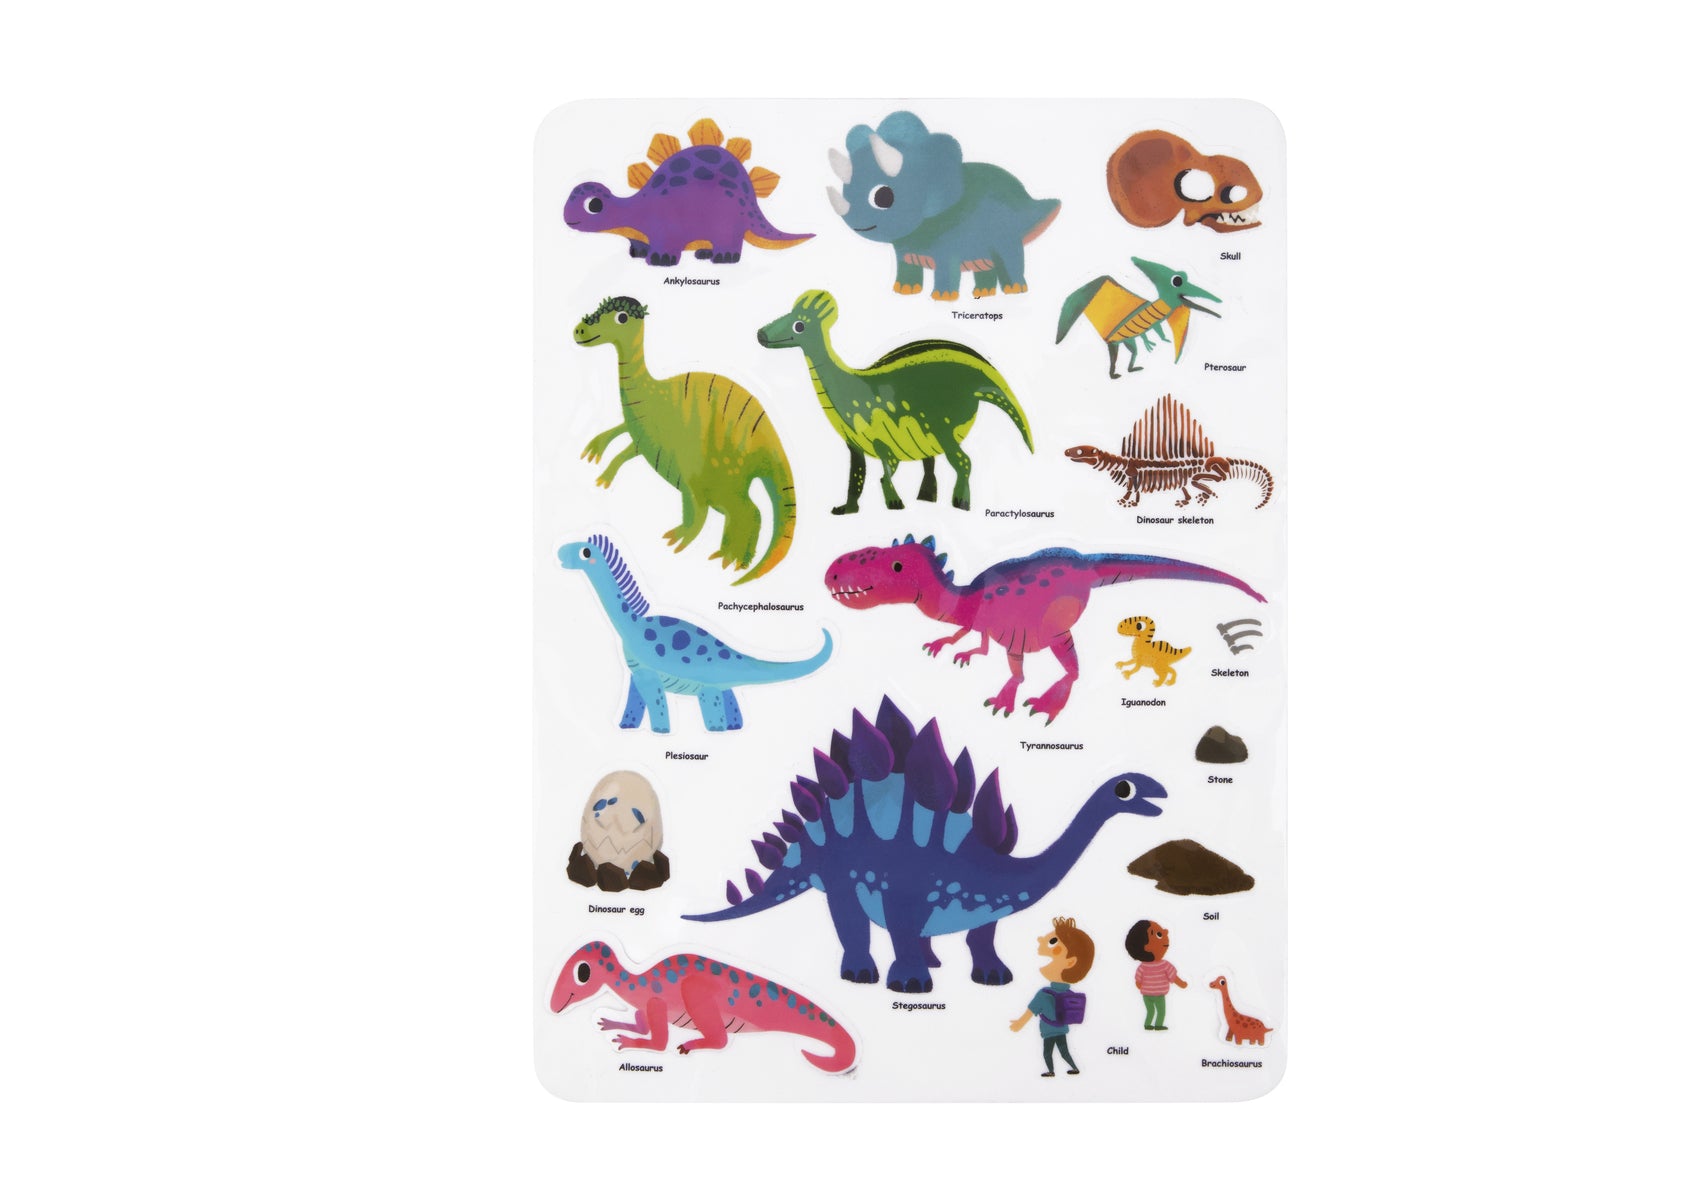 Silicone Sticker Book - Dinosaur Museum